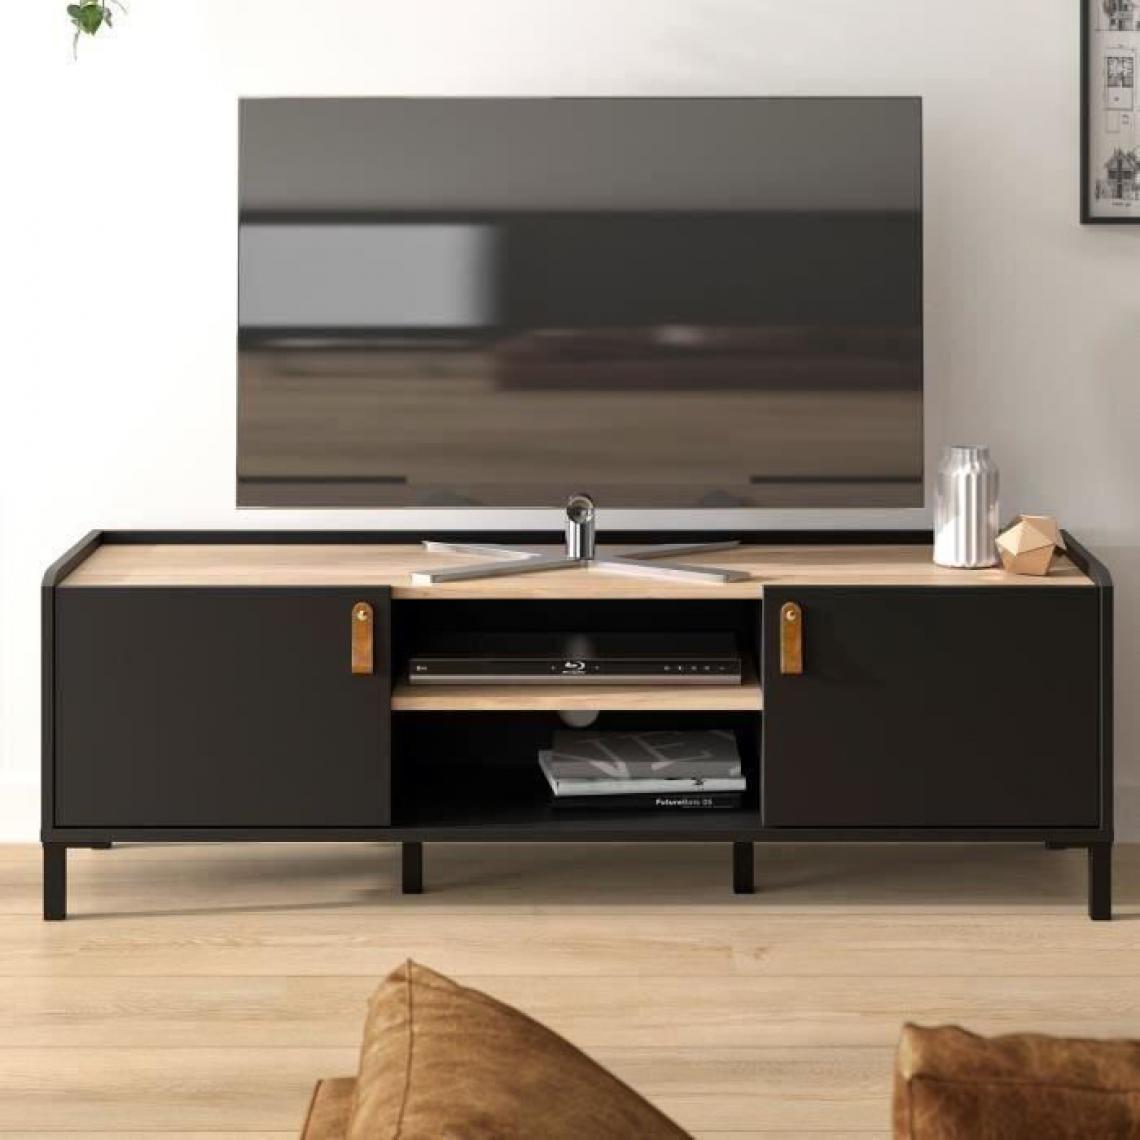 Gami - GAMI Meuble TV - Style Industriel - Made in France - Décor chêne noir - L 136 x P 40 x H 44 cm - AMSTERDAM - Meubles TV, Hi-Fi